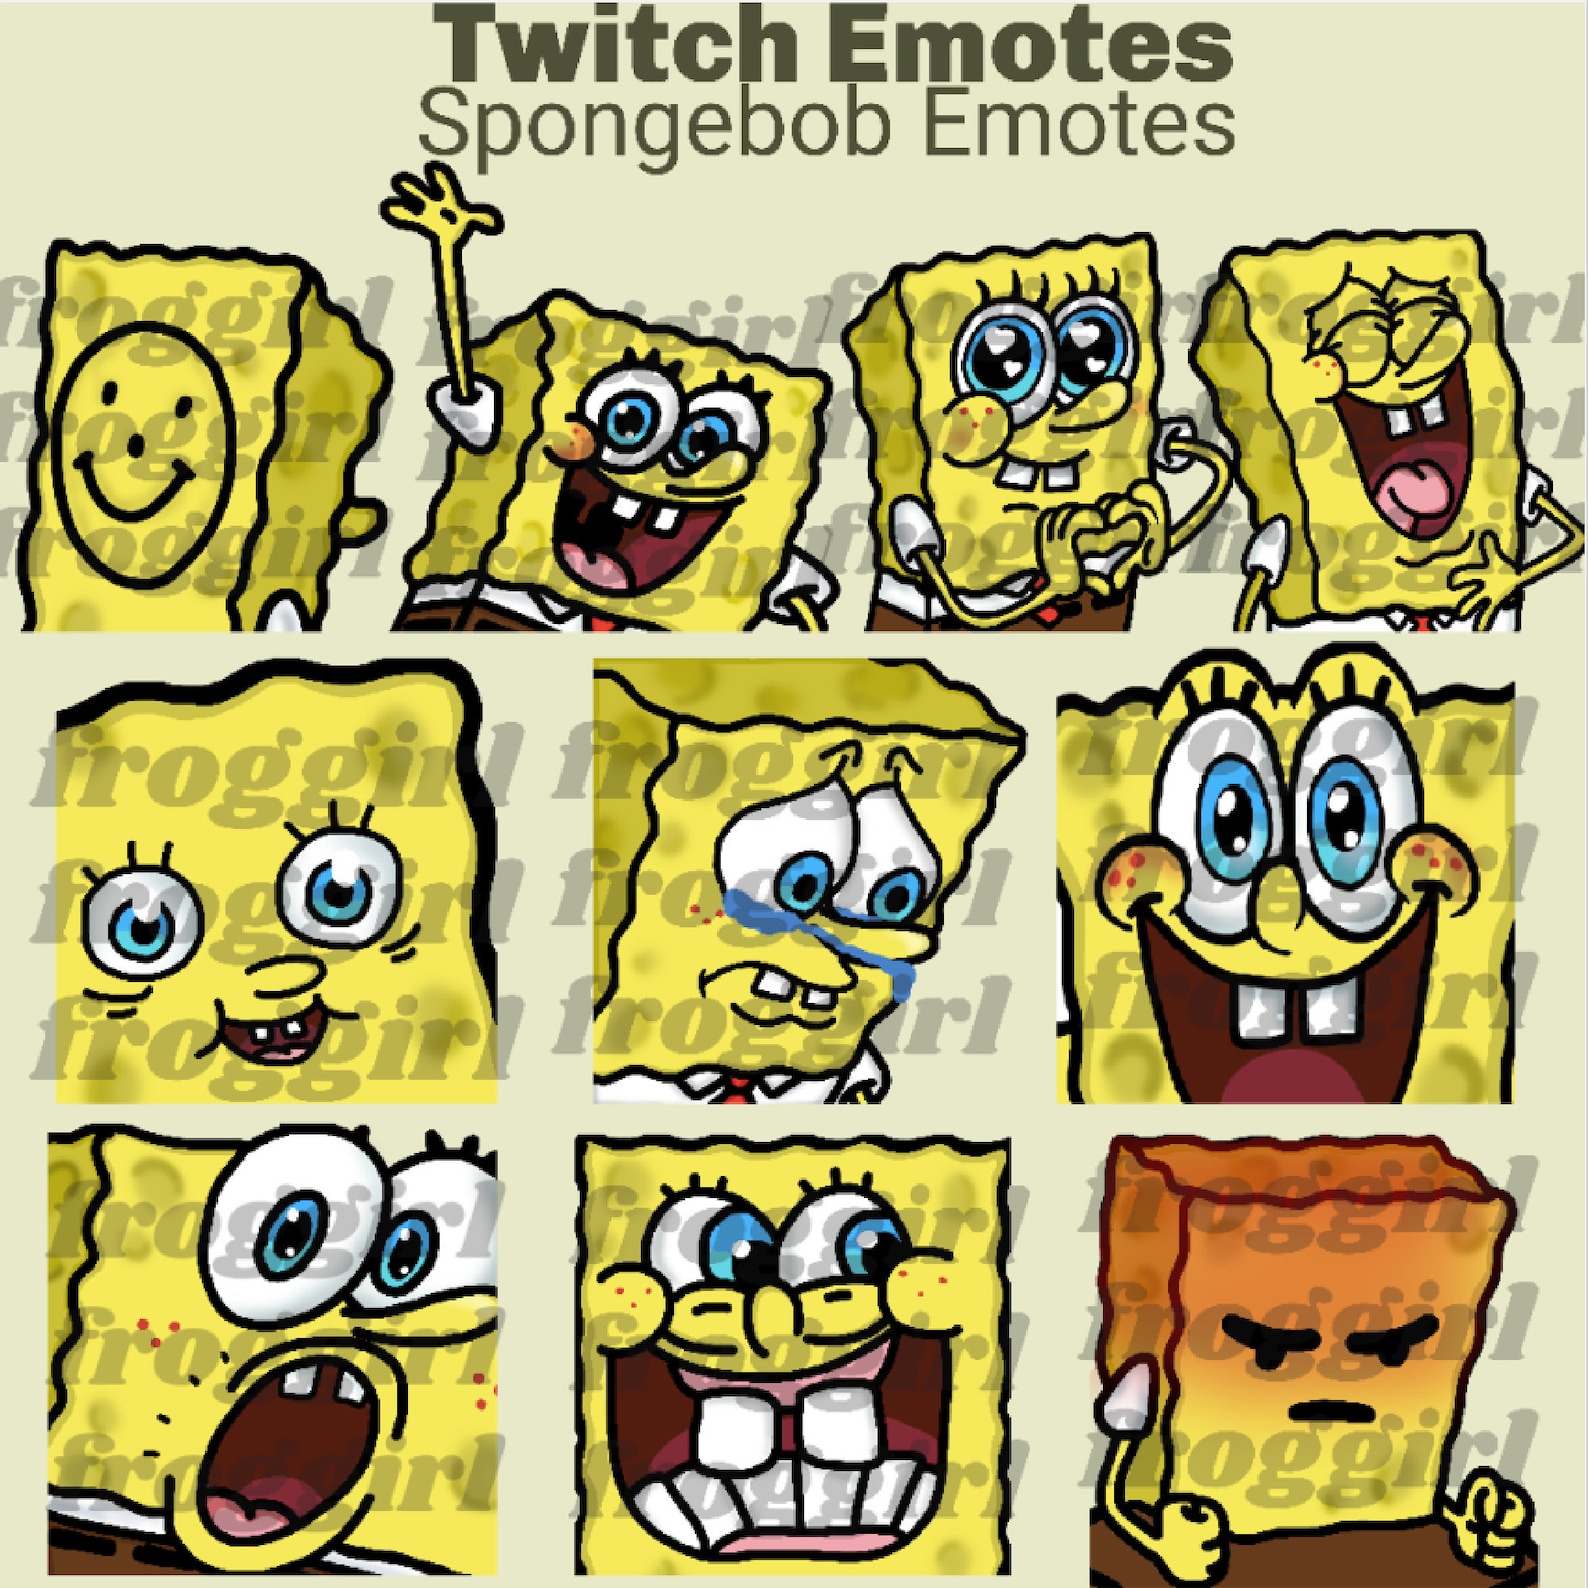 Spongebob pack. Spongebob emotions. Twitch Spongebob.